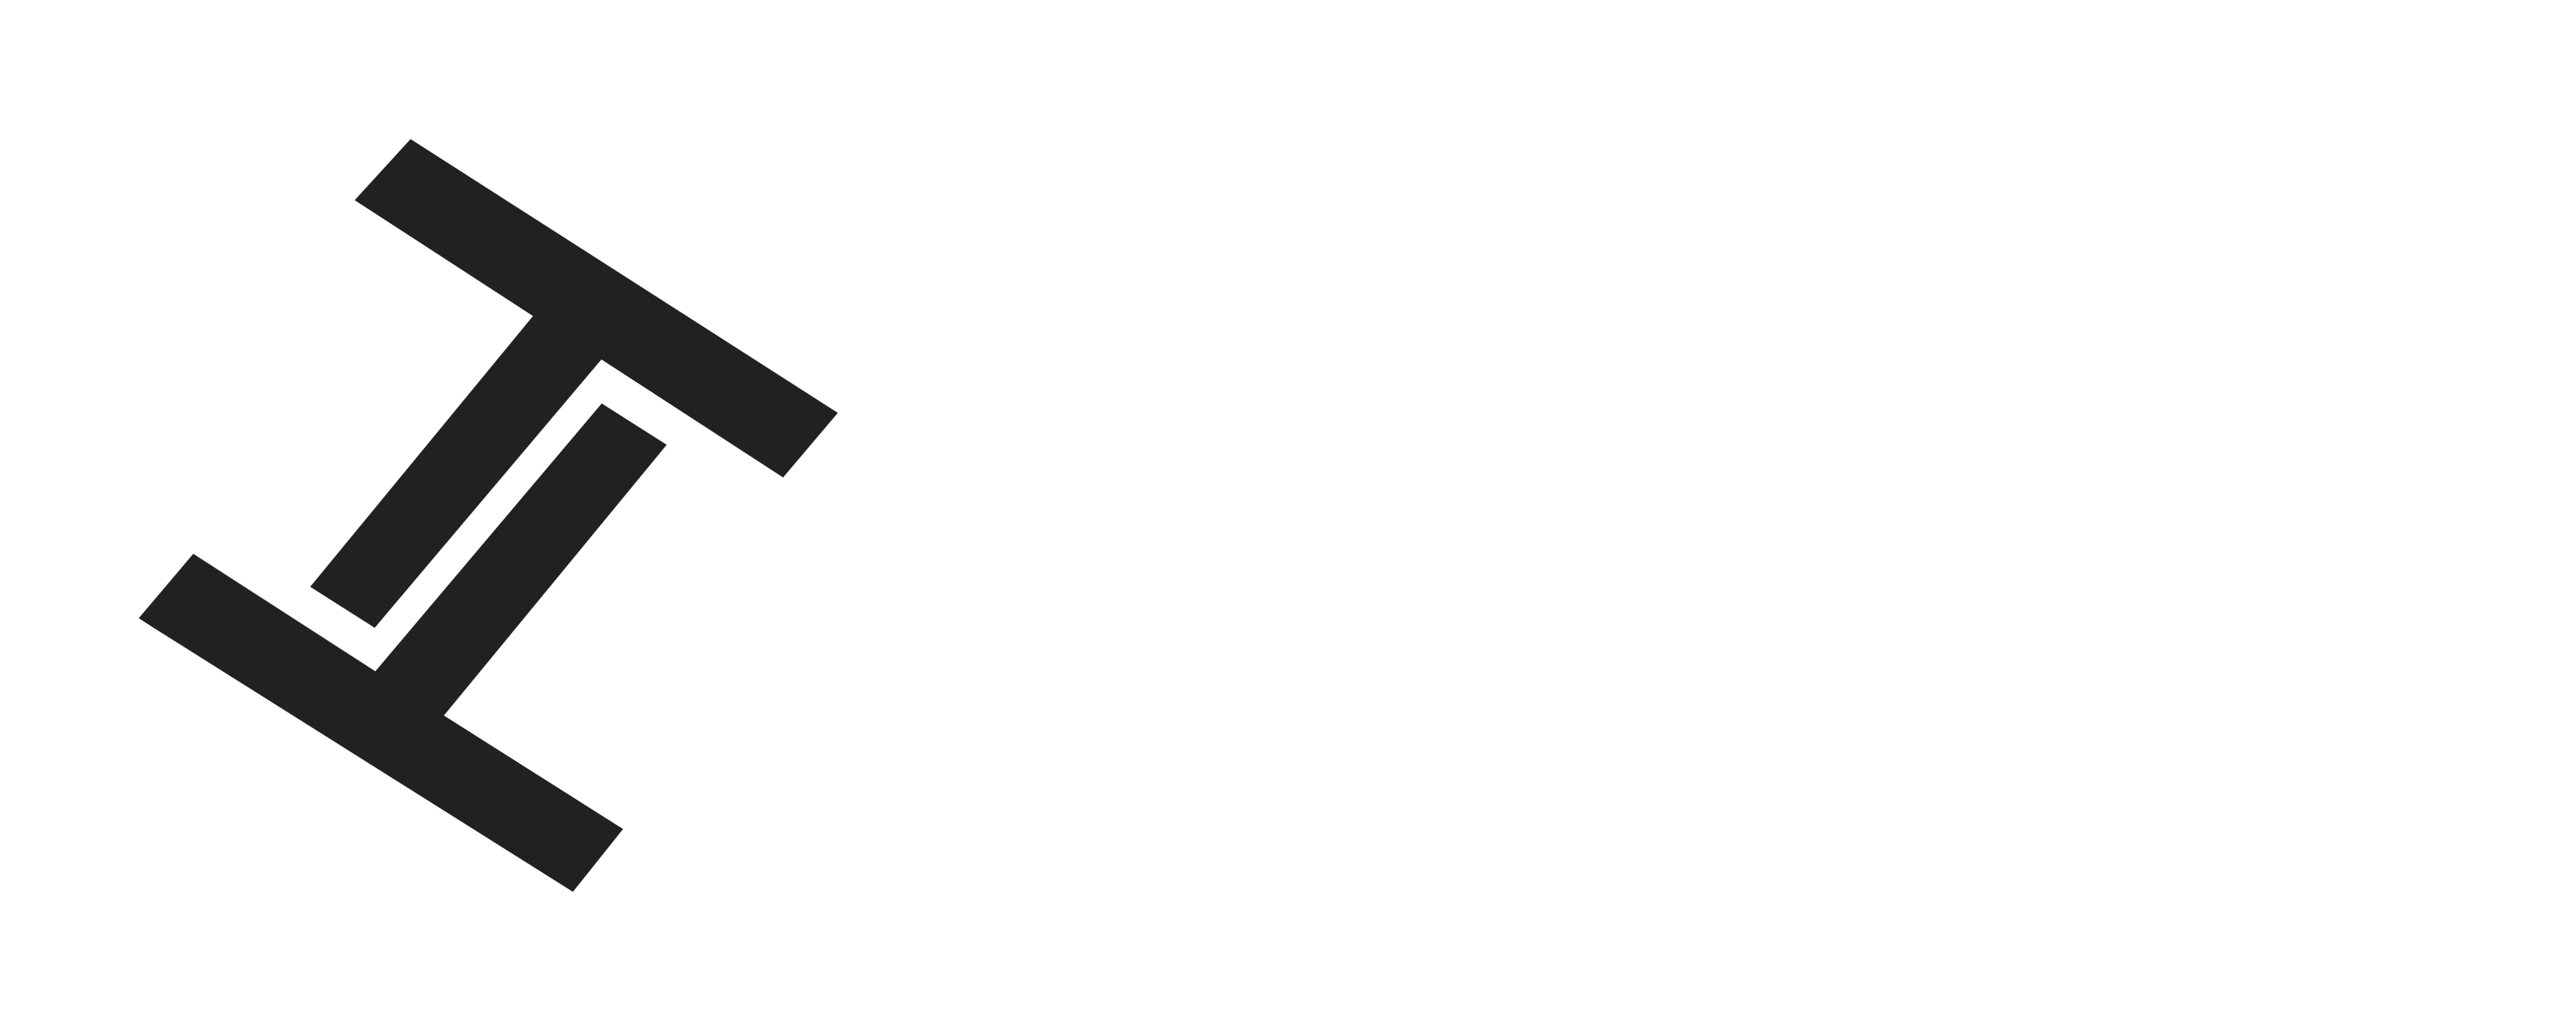 titan-trader